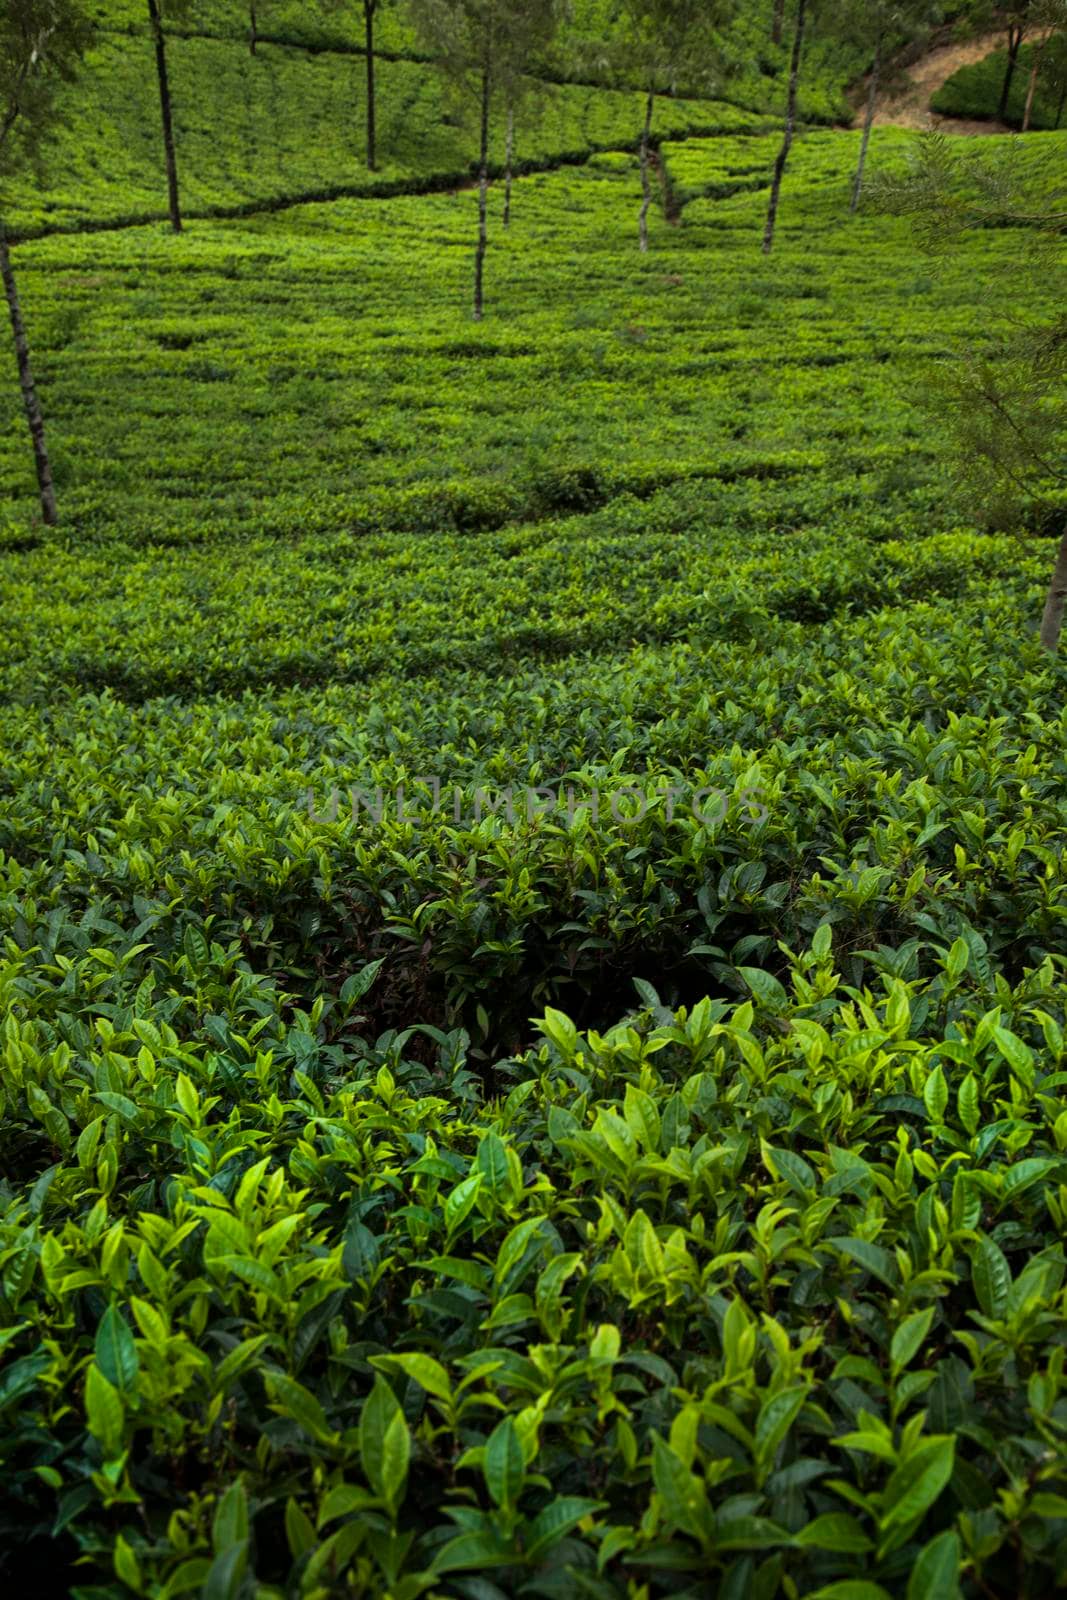 Sri lanka, Asia, Beautiful fresh green tea plantation